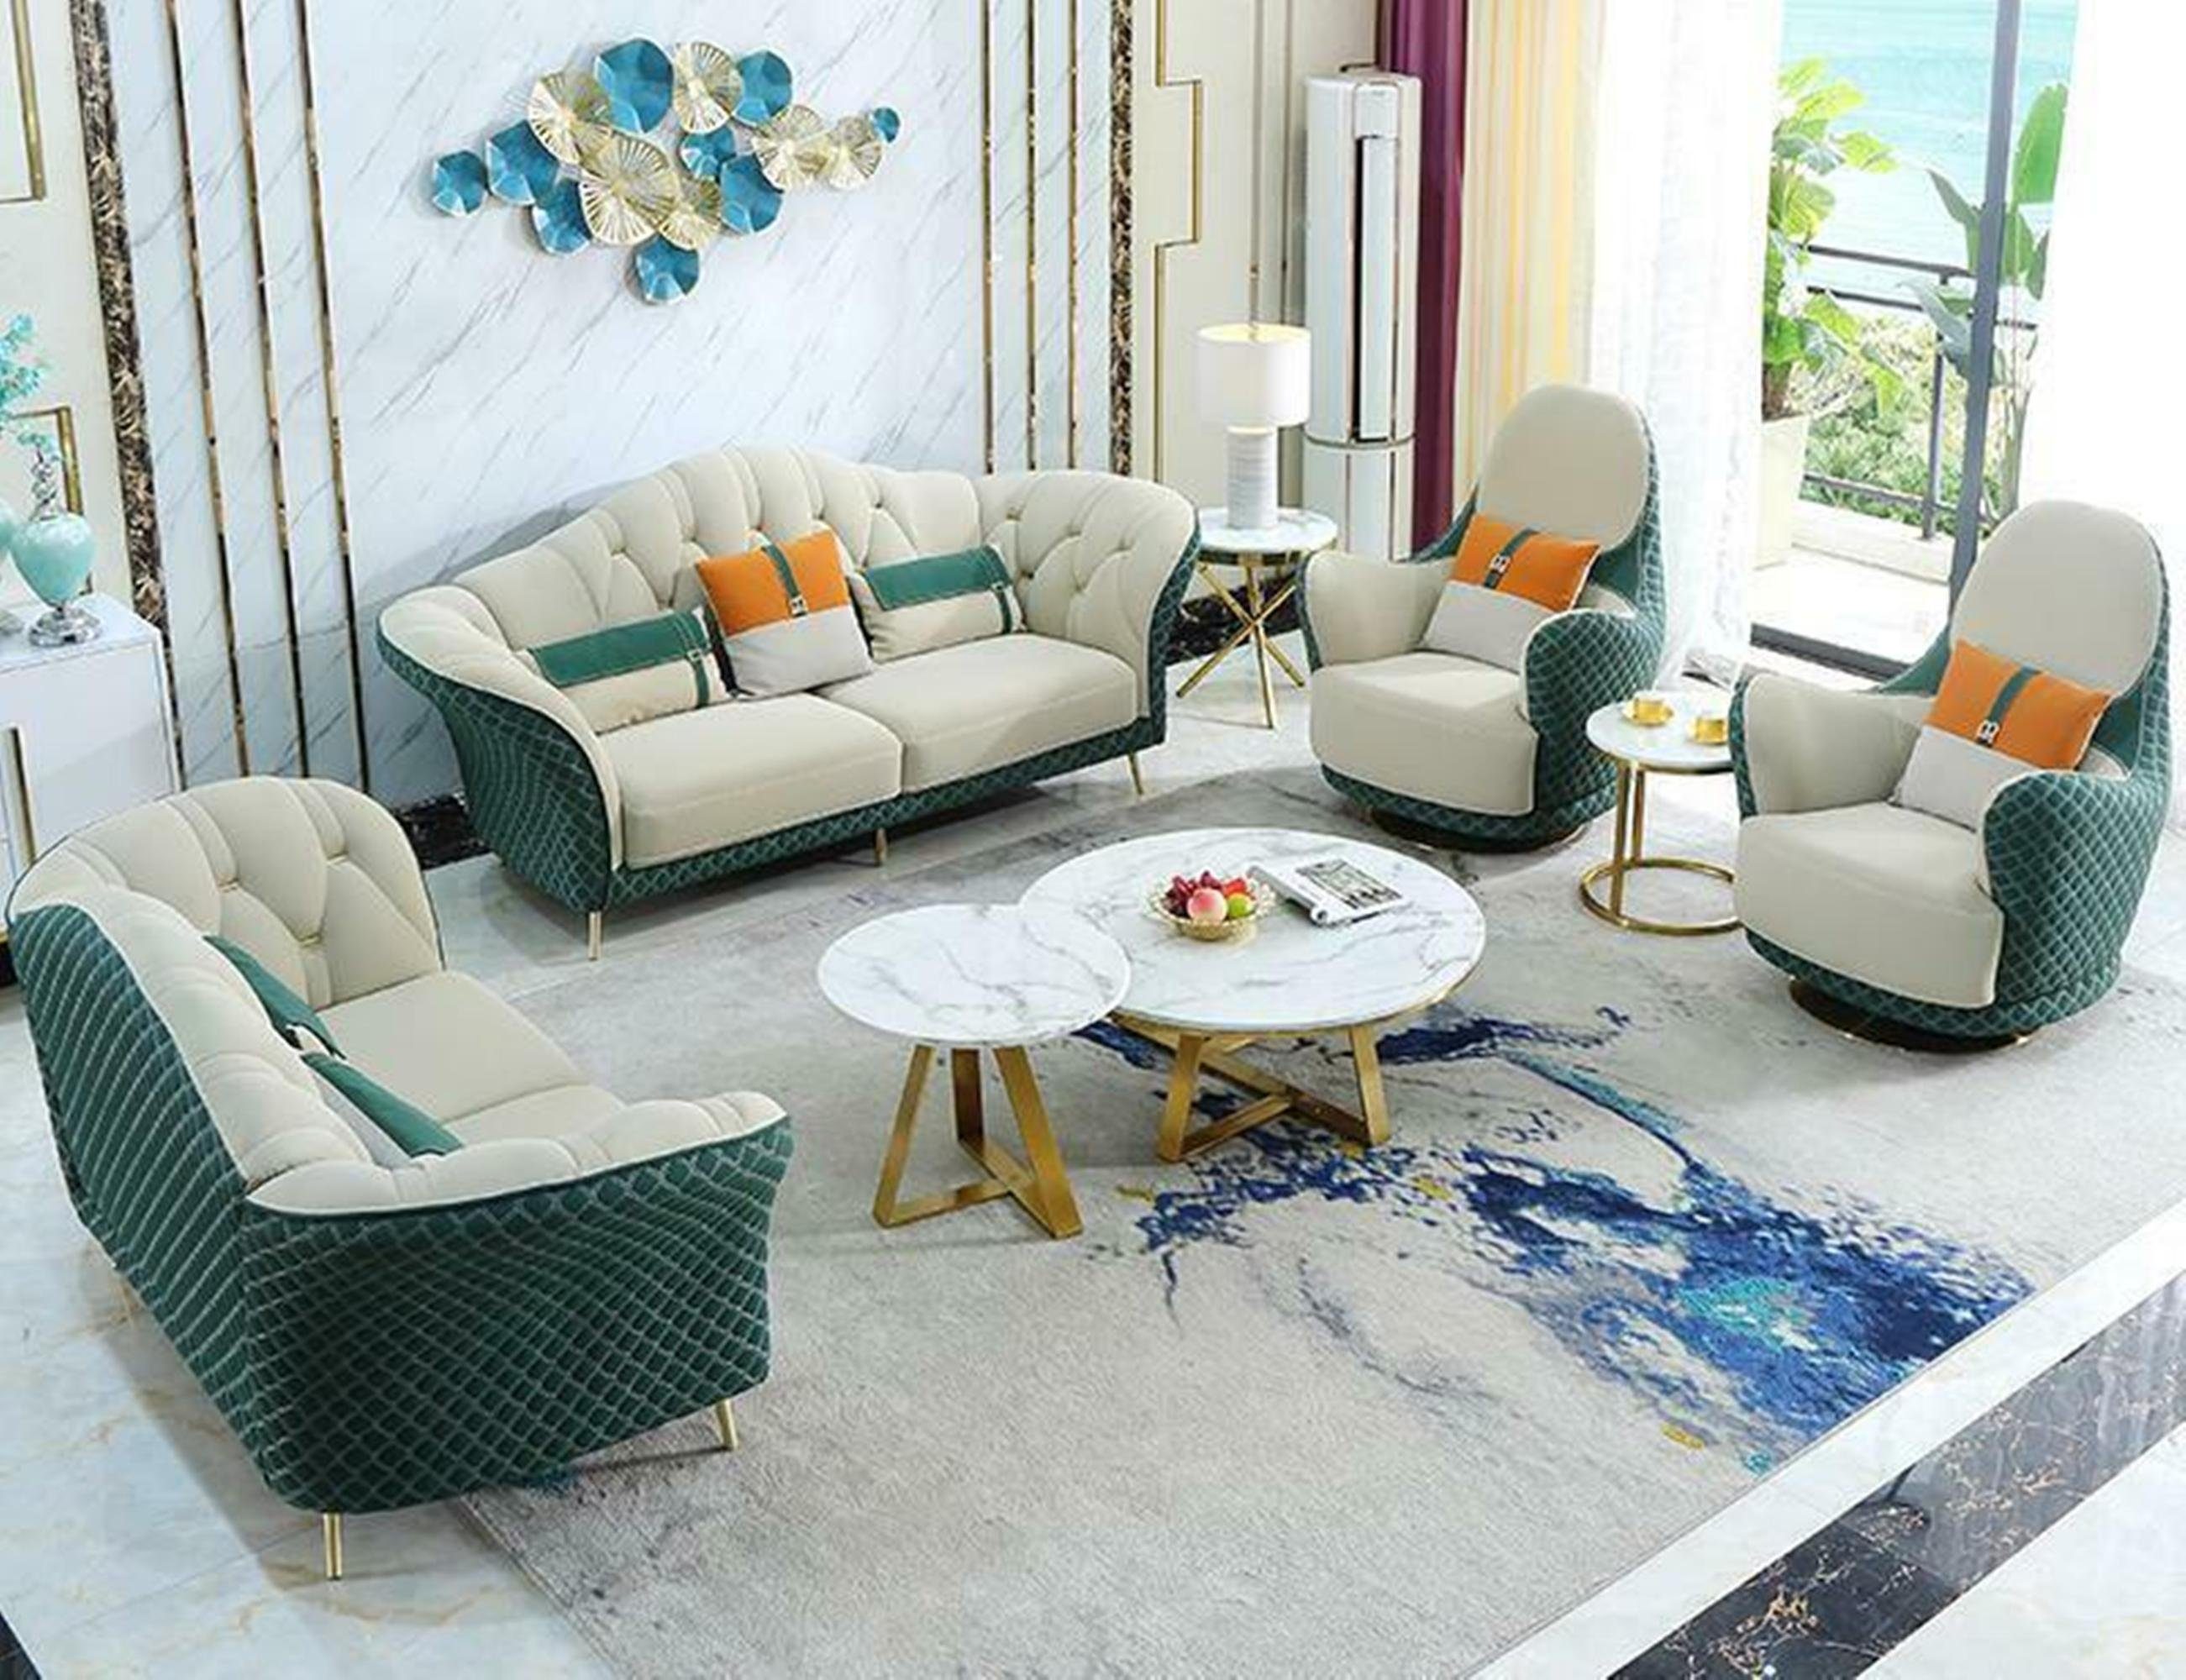 JVmoebel Sofa Luxus große Sofagarnitur 3+2+1+1 Sitzer Modernes Design Neu, Made in Europe